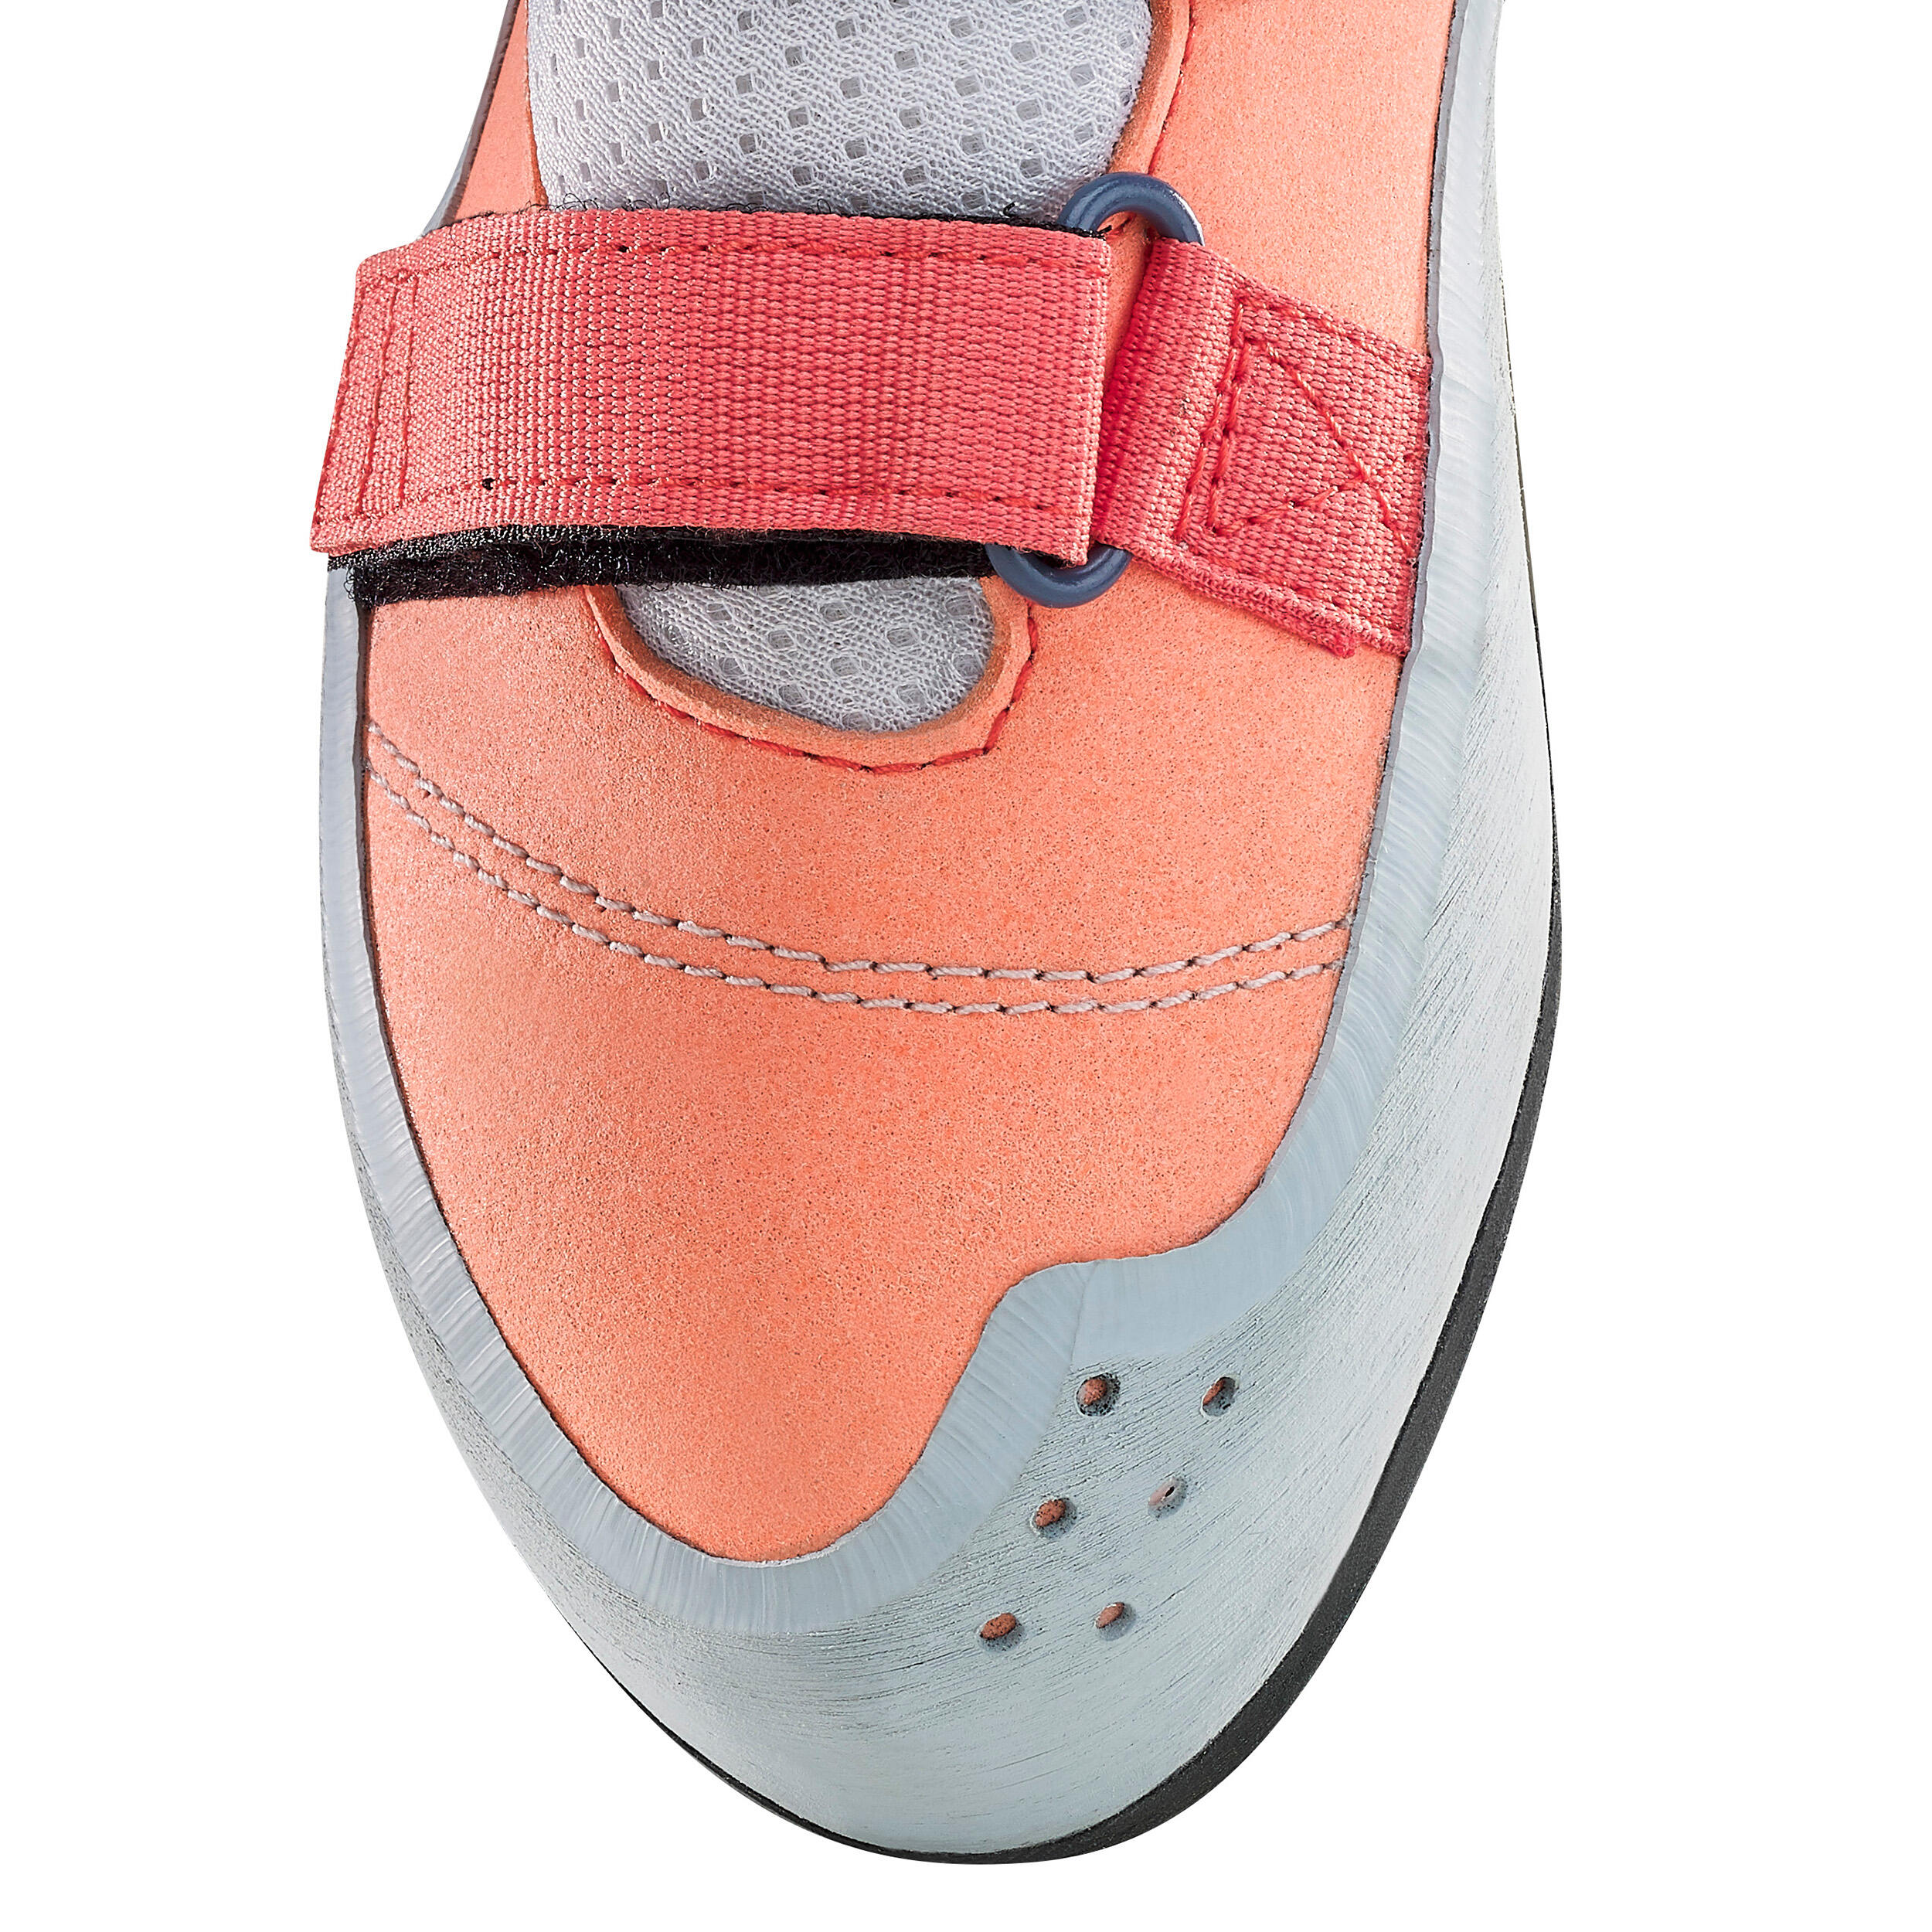 Comfortable rock climbing shoes, coral 8/12